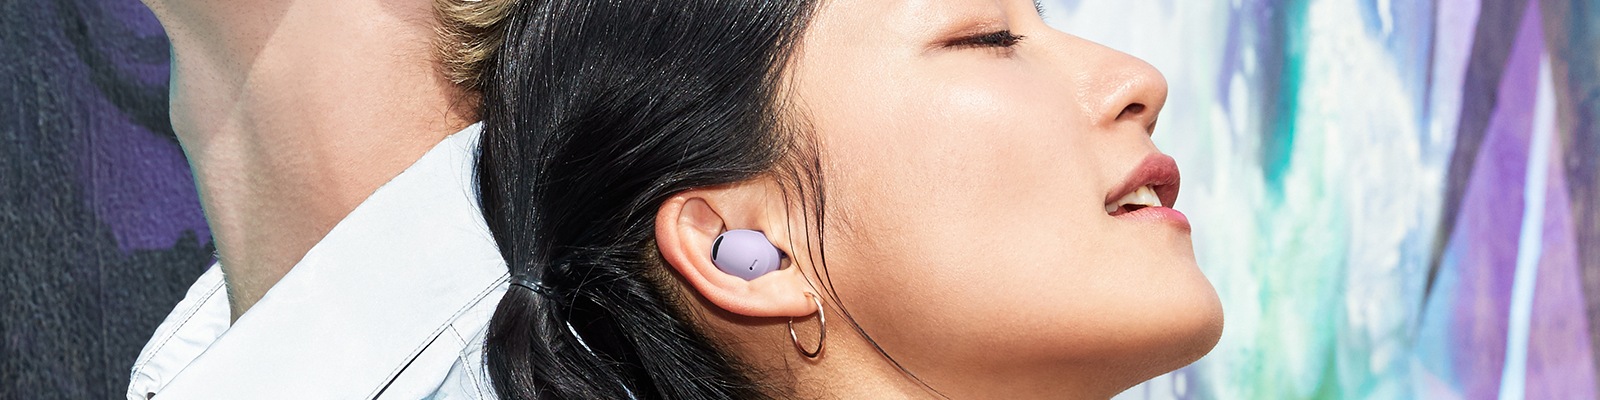 Beste in-ear oordopjes: 3 Earbuds op rij | Samsung & You | Samsung Nederland